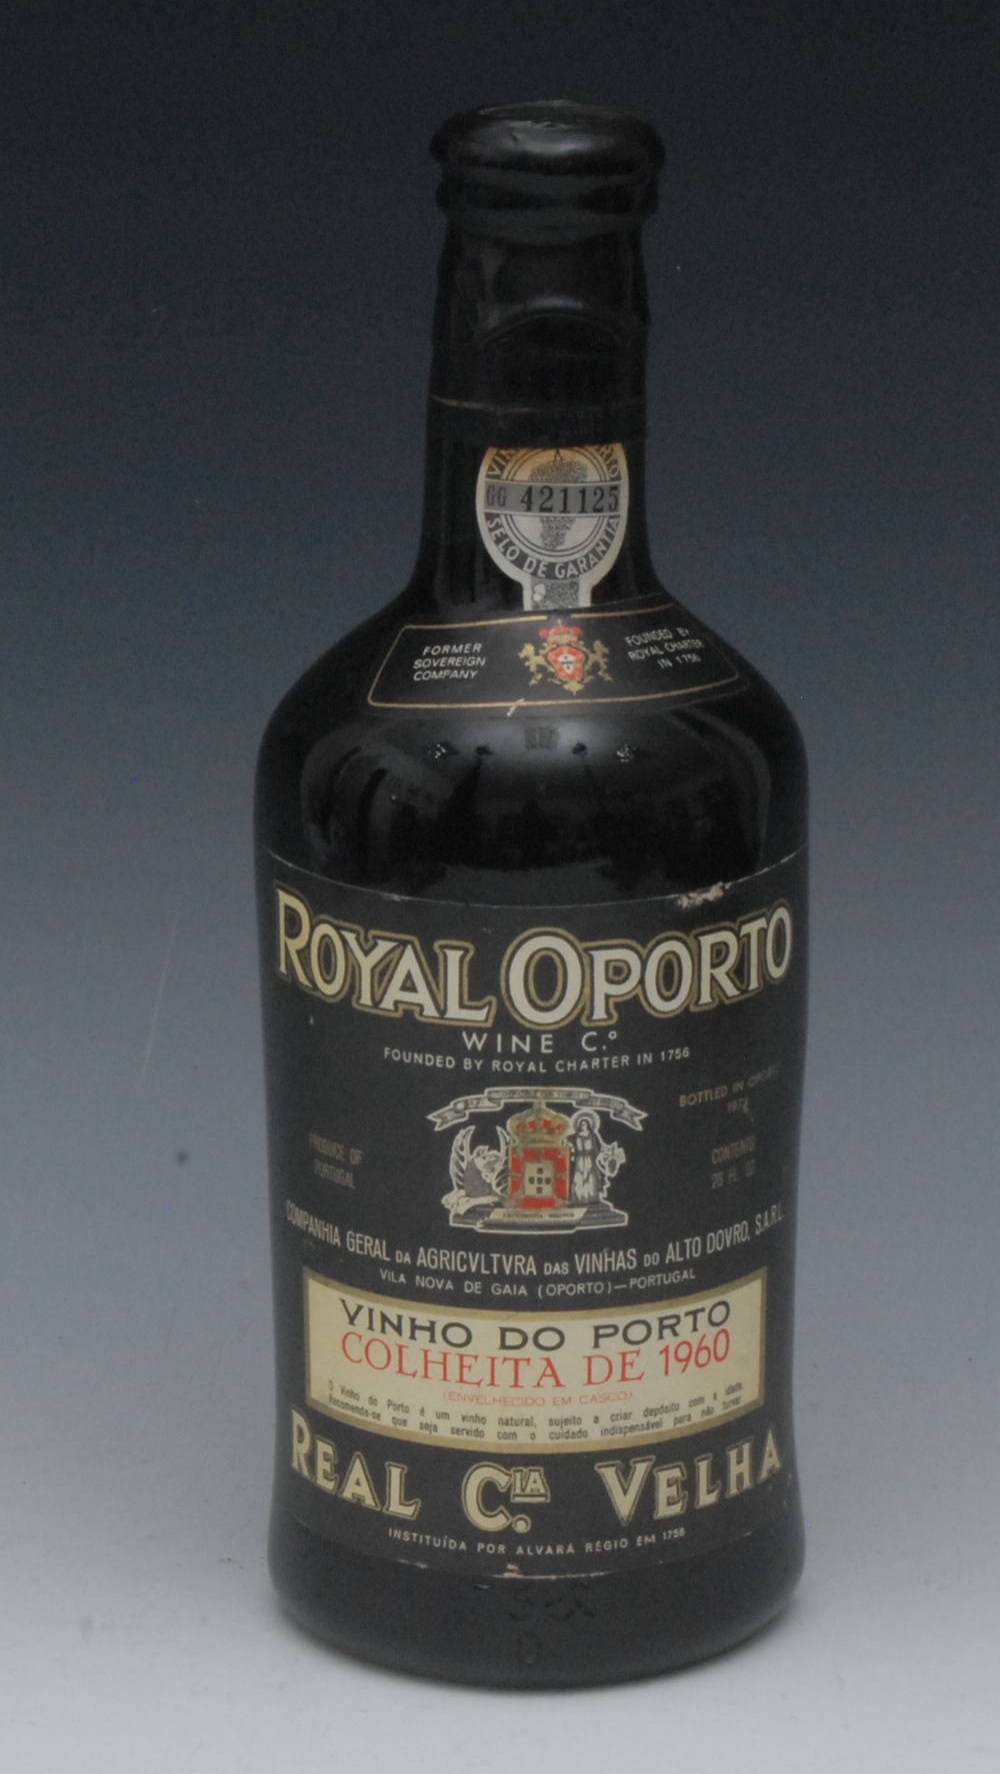 Royal Oporto, Vinho Do Porto, Colheita de 1960